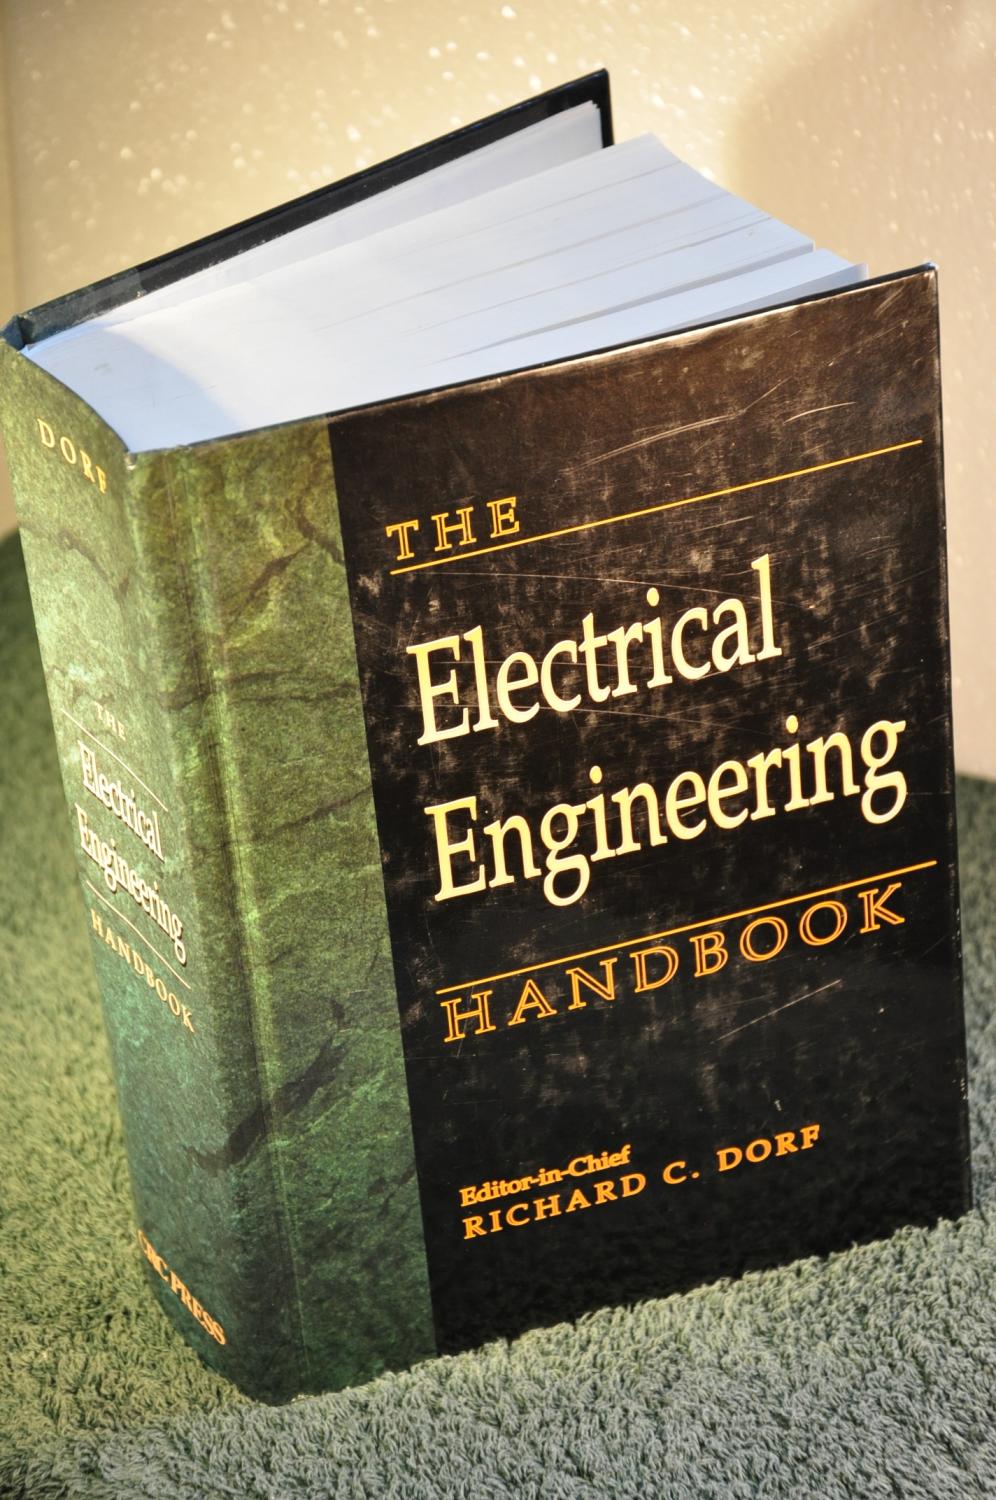 The Electrical Engineering Handbook - Dorf, Richard C. editor in chief